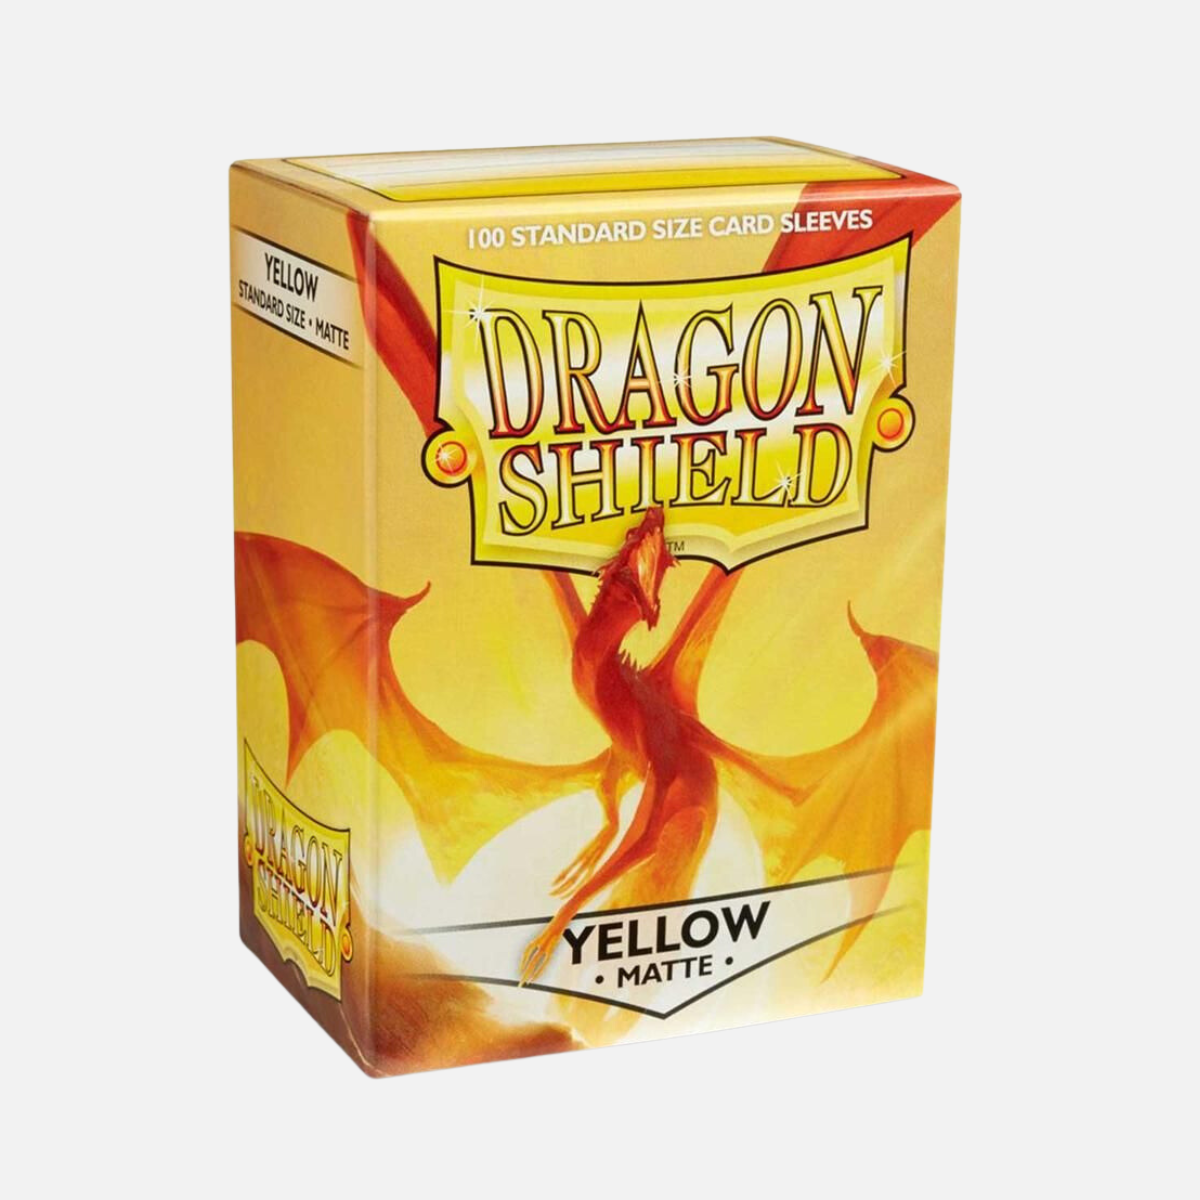 Dragon Shield card sleeves box of 100 yellow matte